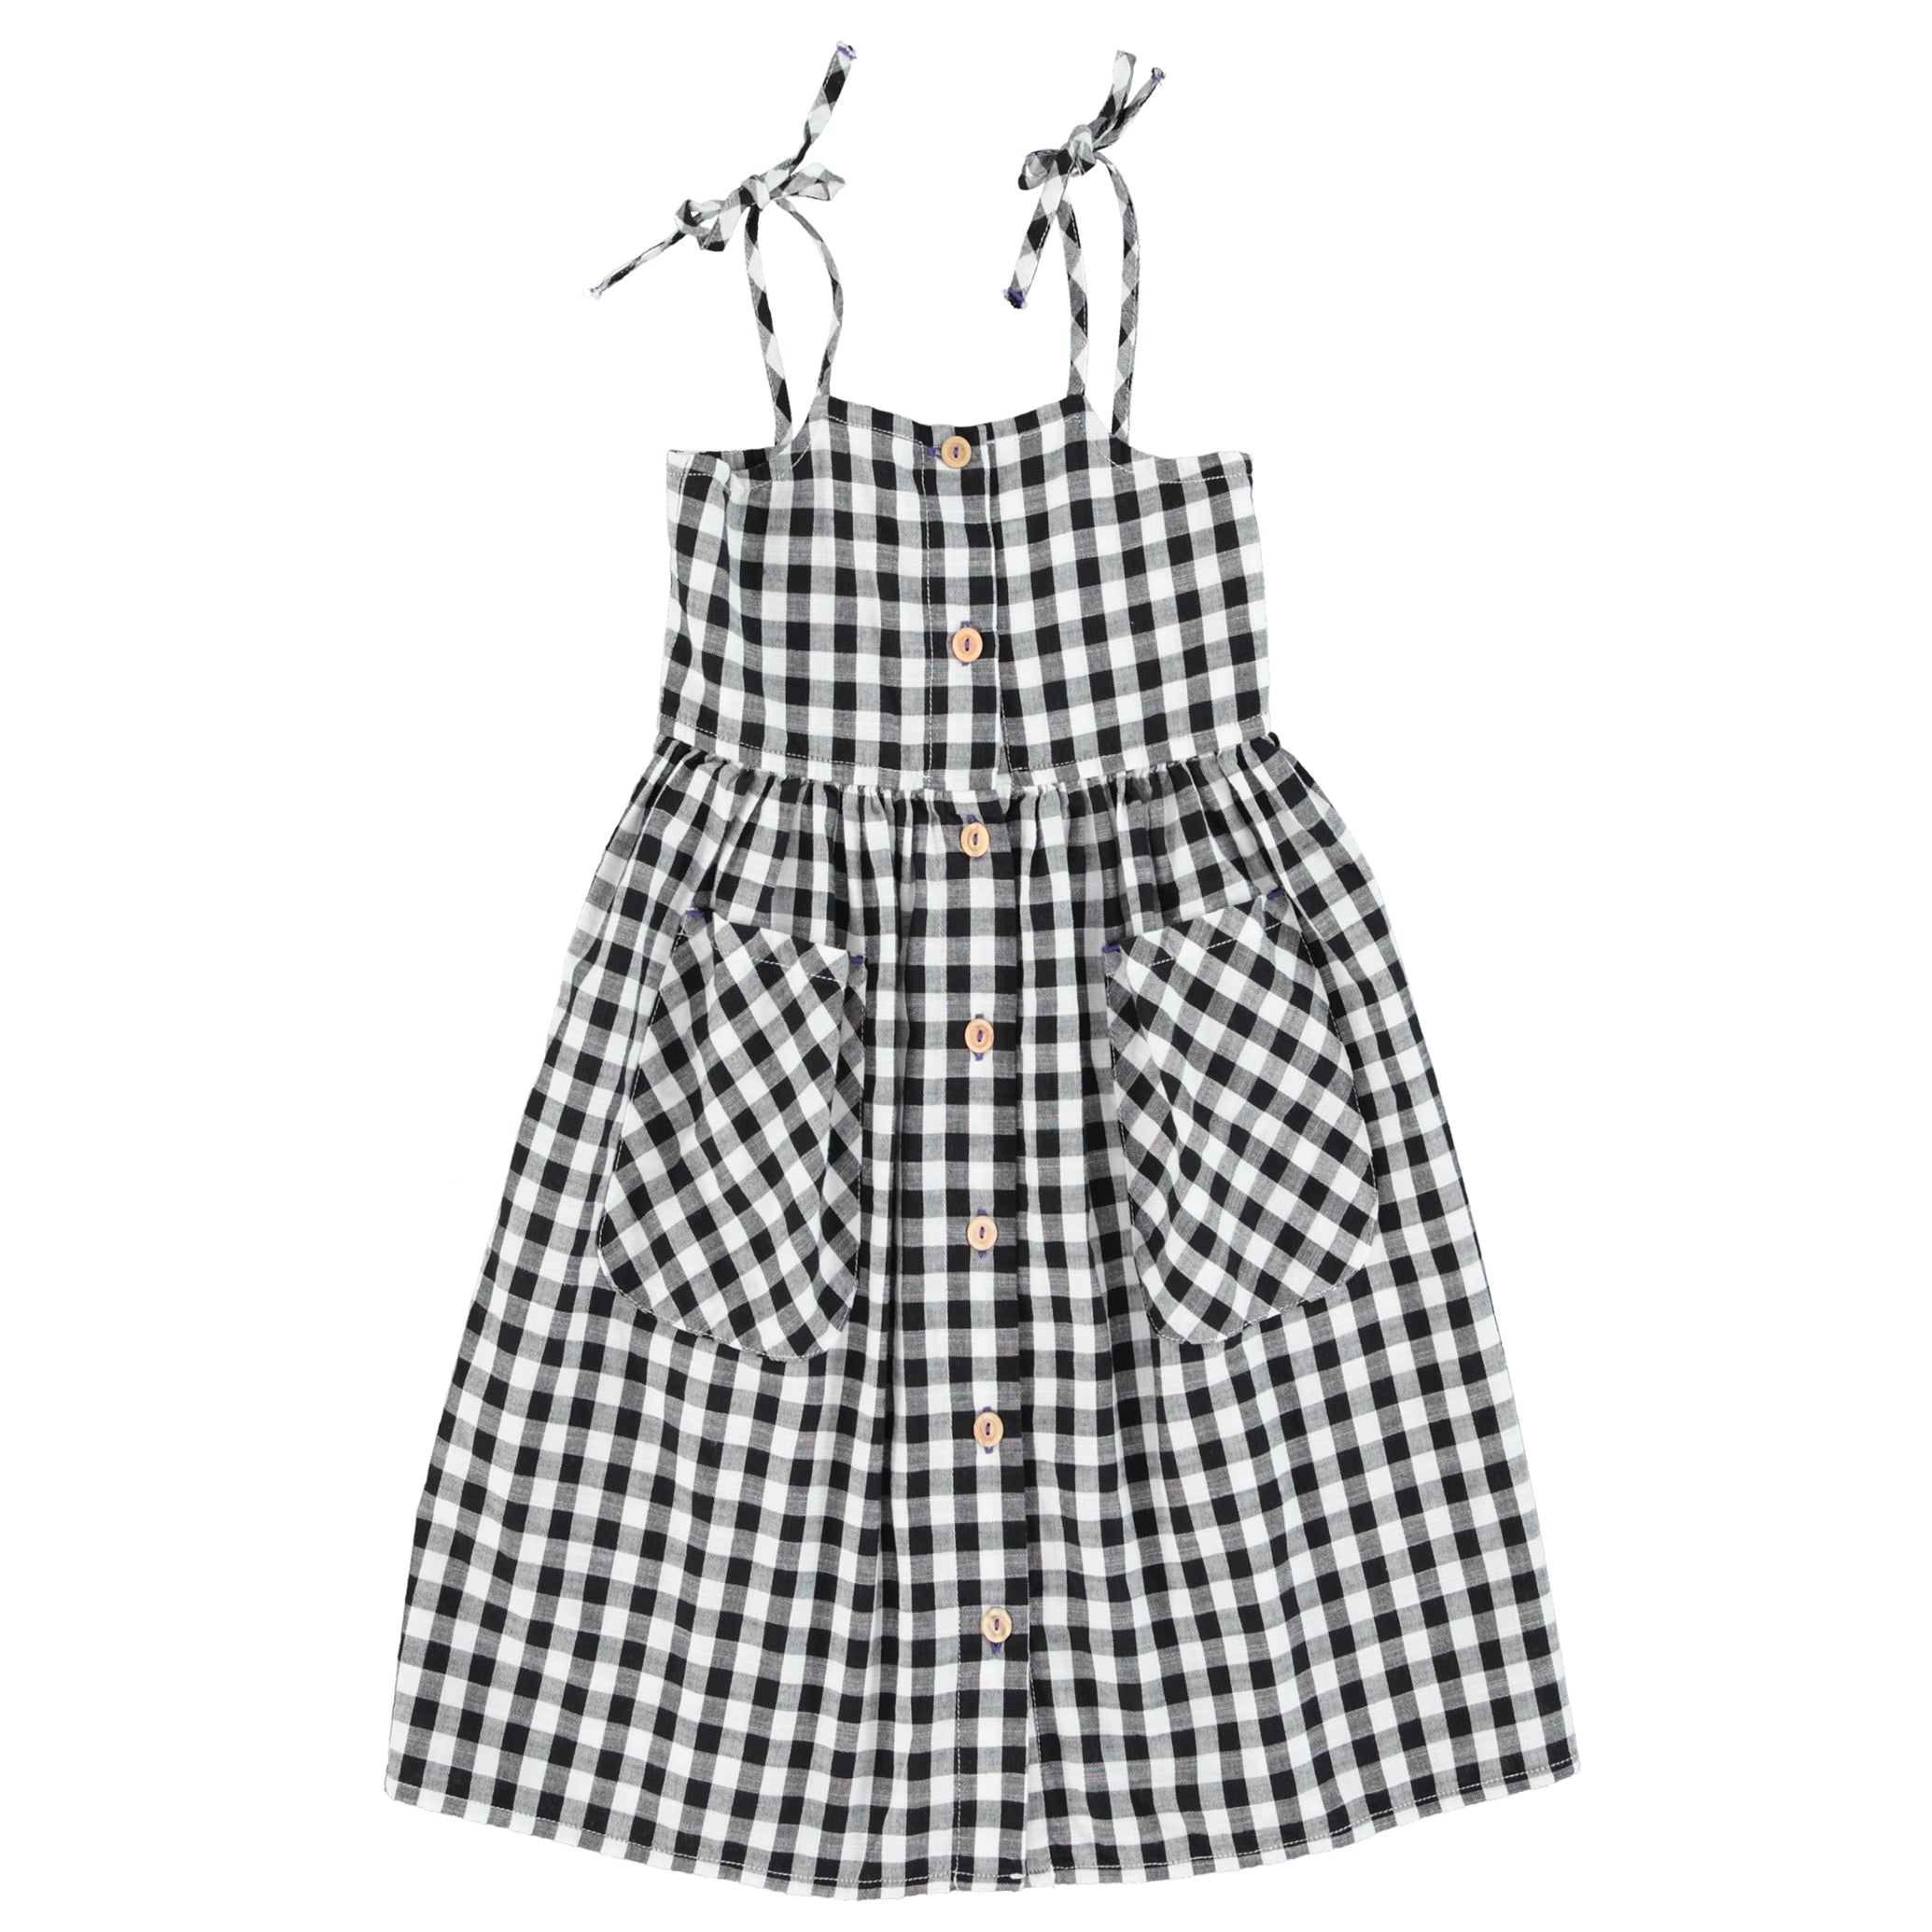 Piupiuchick Black and White Checkered Long Pocket Dress